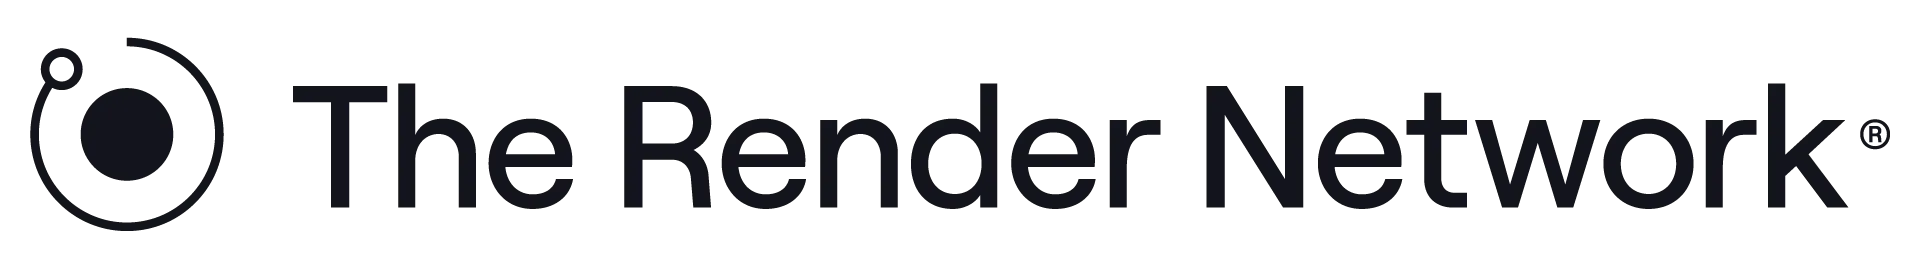 render network logo